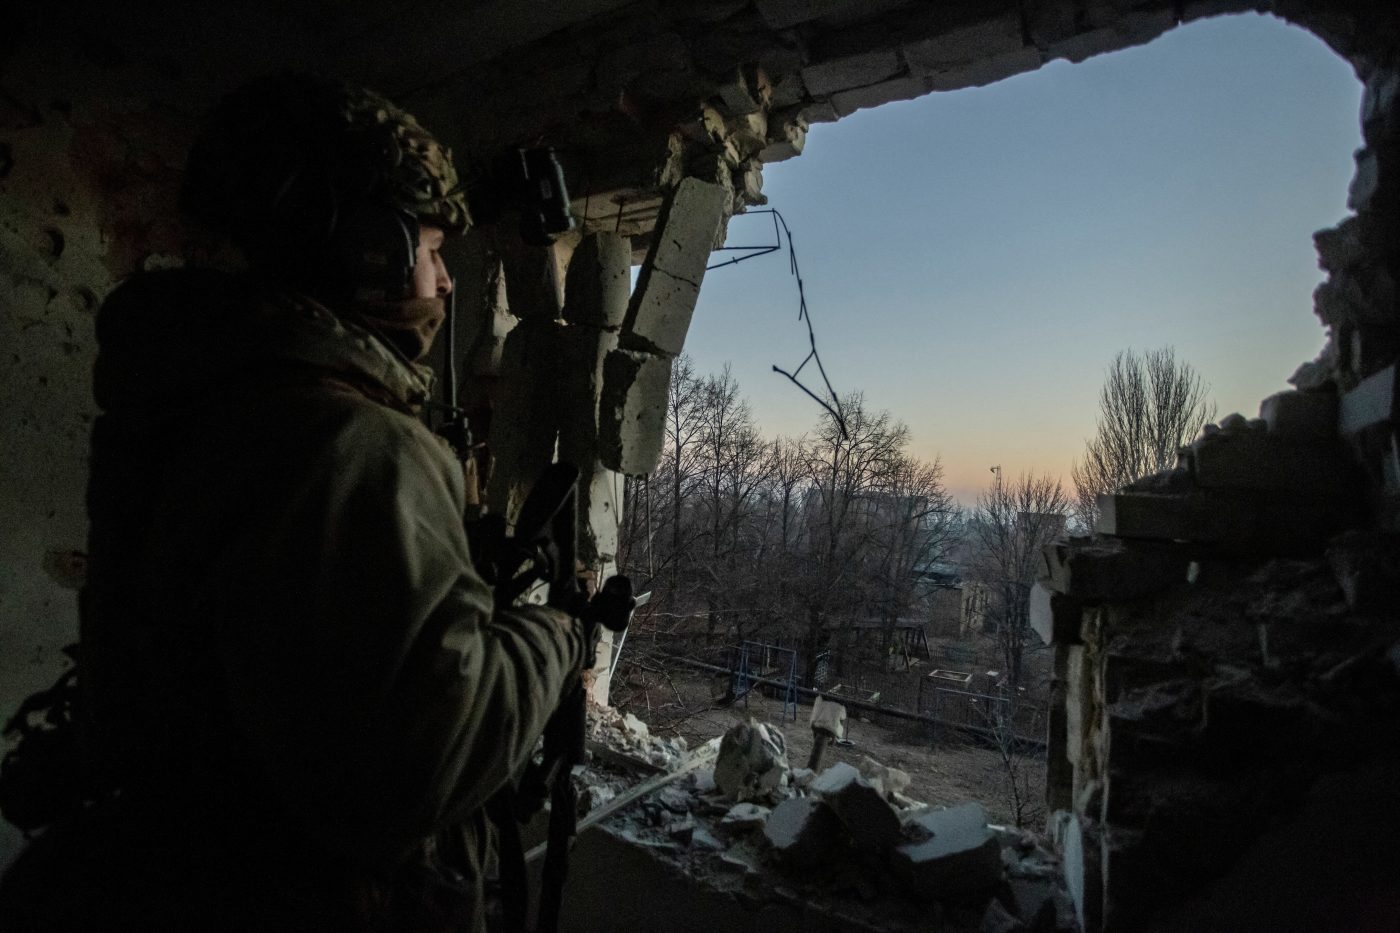 Photo: A Ukrainian serviceman looks on, amid Russia's attack on Ukraine, in Bakhmut, Donetsk region, Ukraine January 27, 2023. Credit: REUTERS/Yan Dobronosov